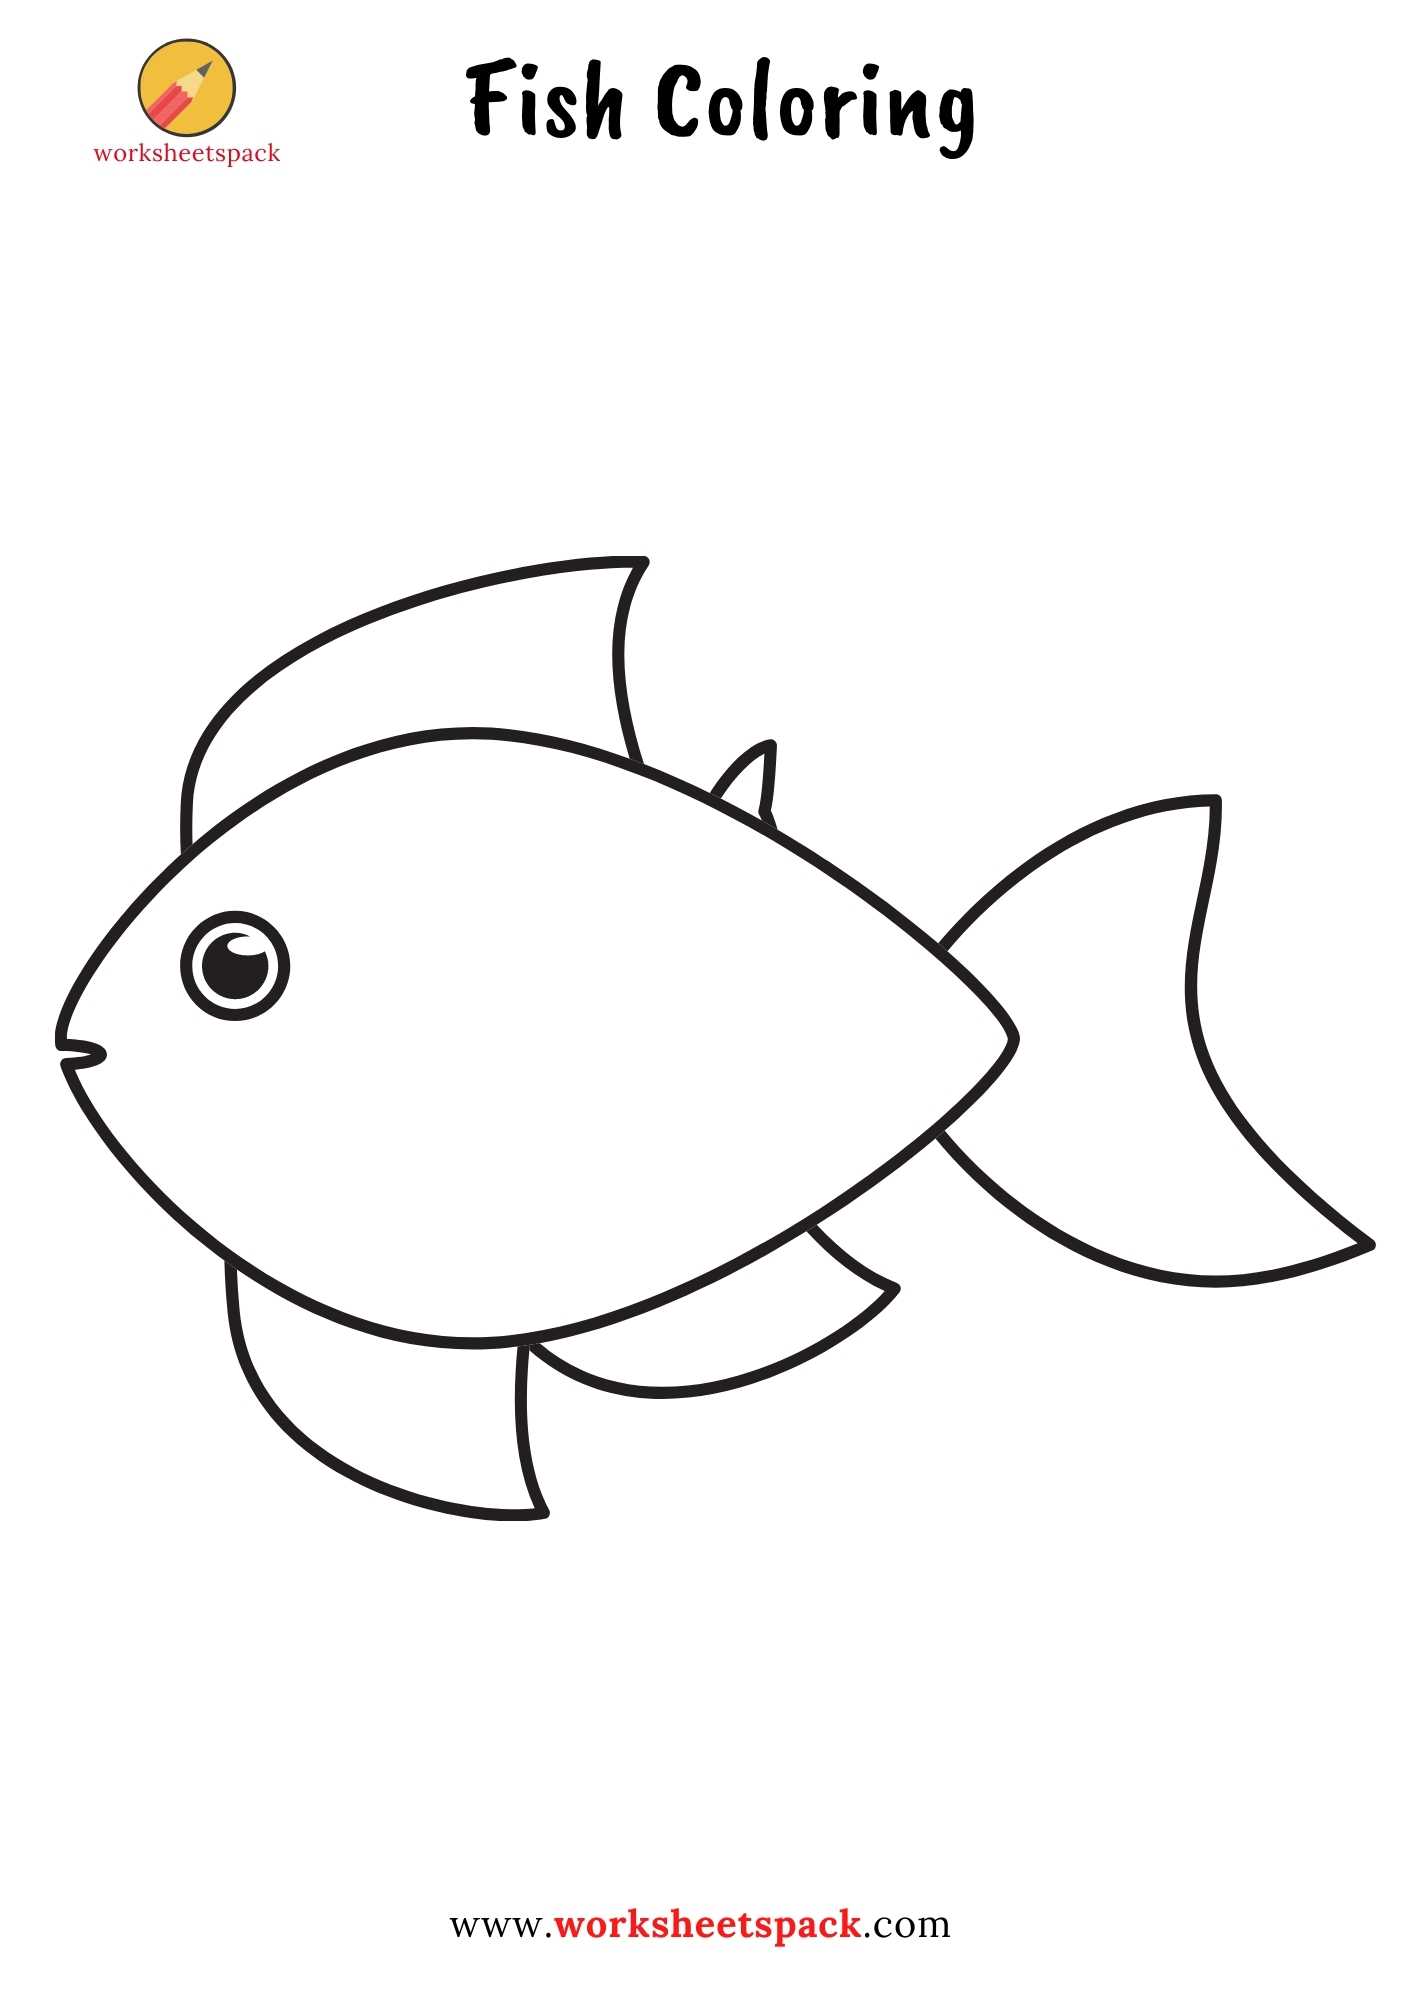 fish-coloring-pages-free-cartoon-worksheetspack